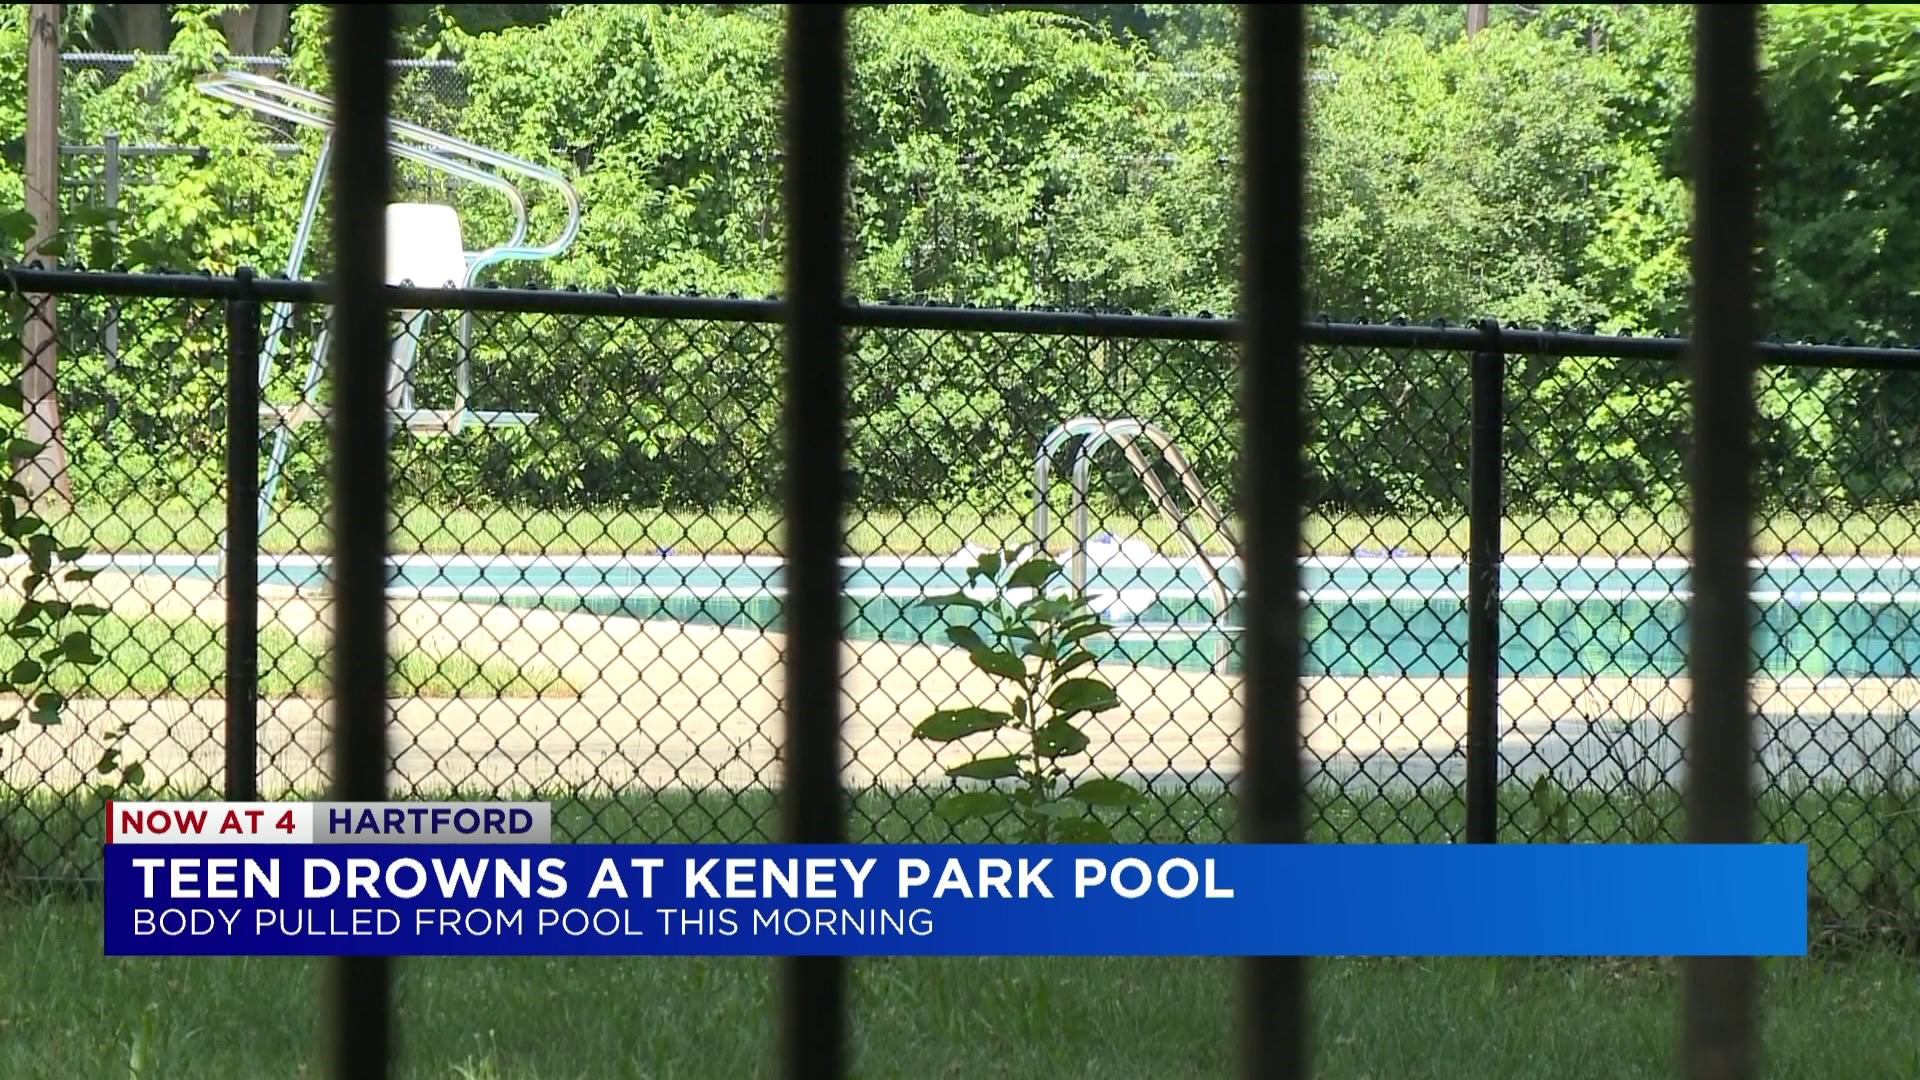 Teen drowns in Hartford pool overnight